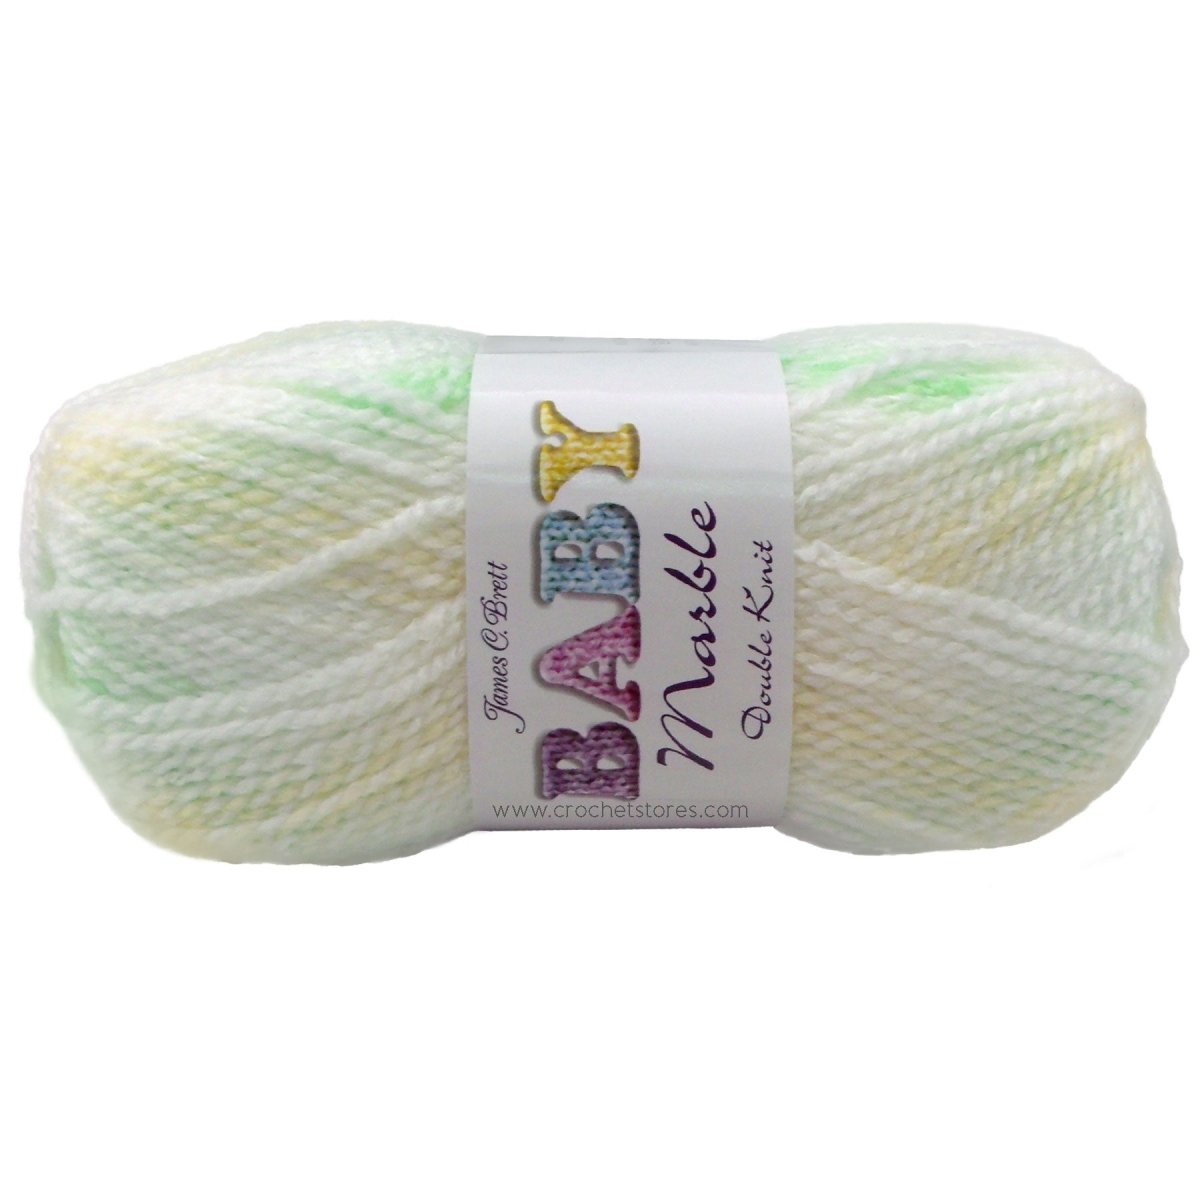 BABY MARBLE DK - CrochetstoresBM45060019097038